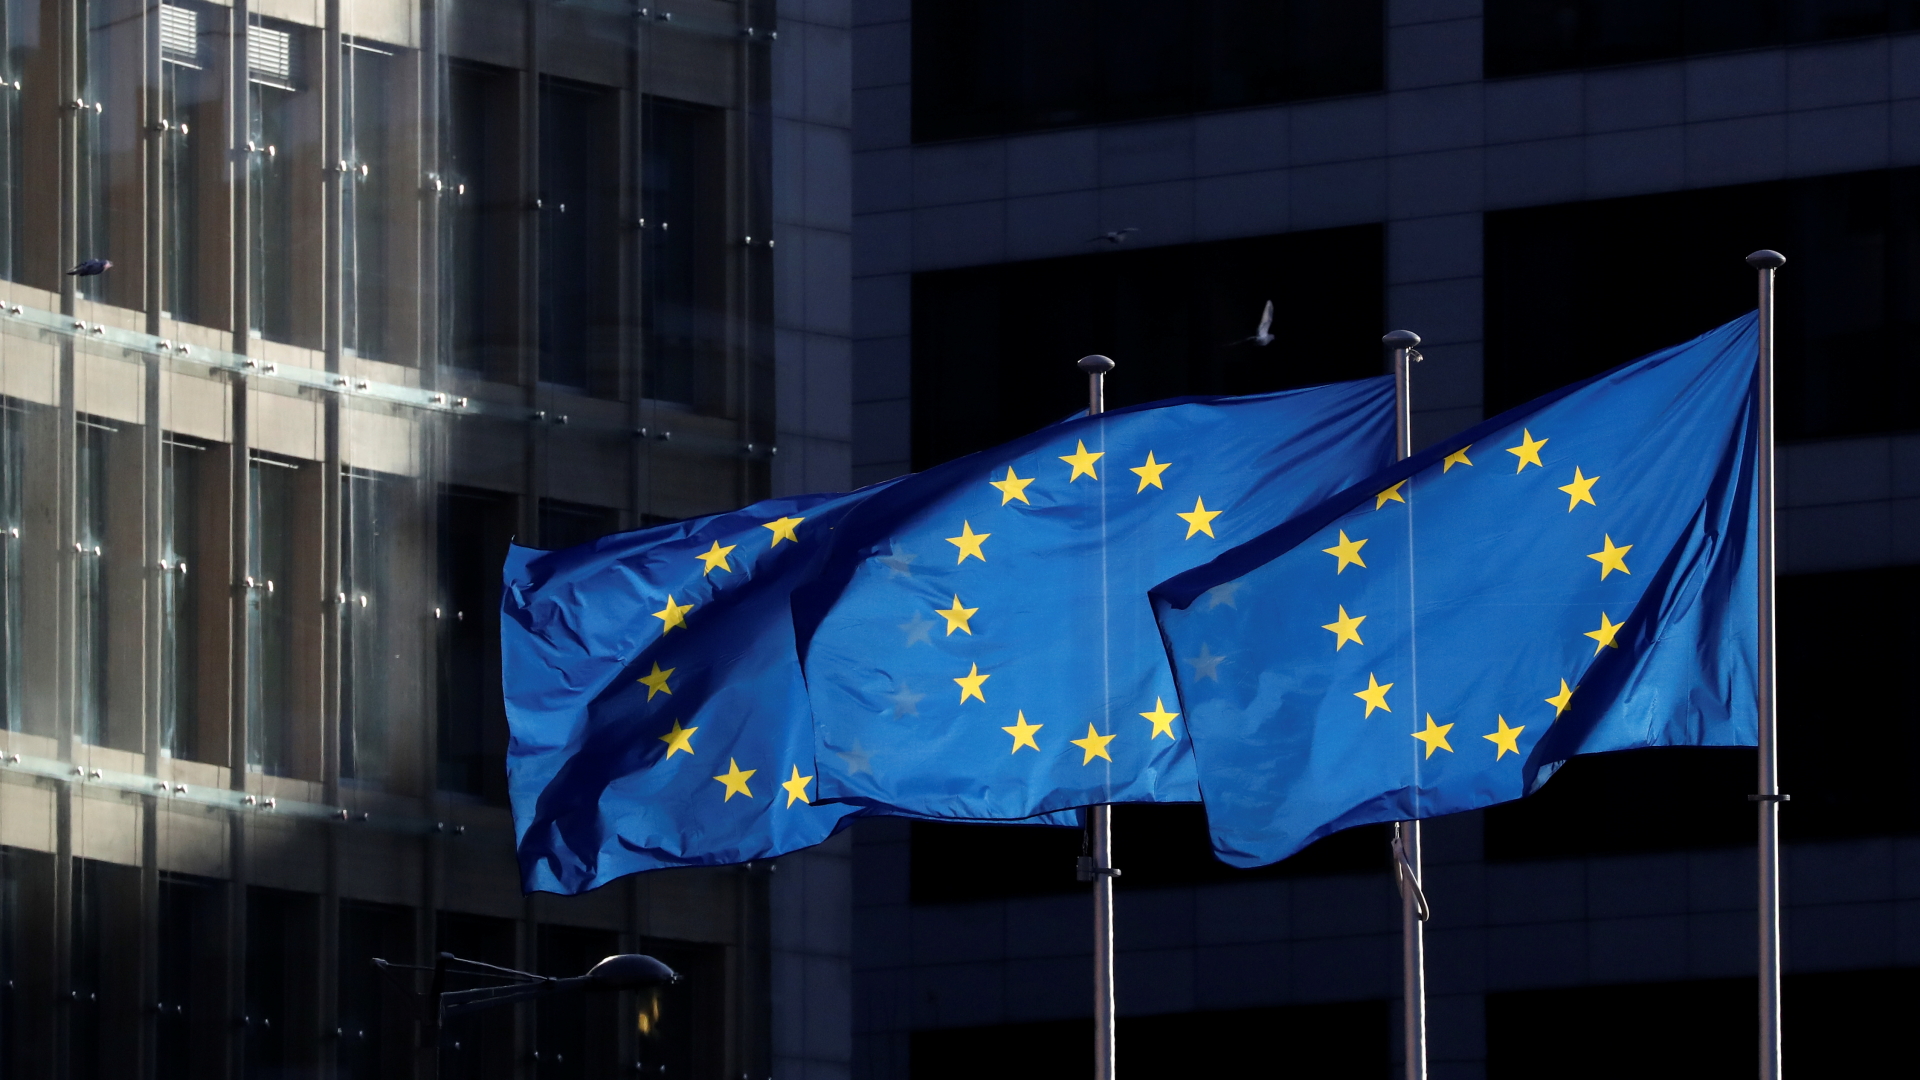 Flaggen vor der EU-Zentrale in Brüssel. | REUTERS